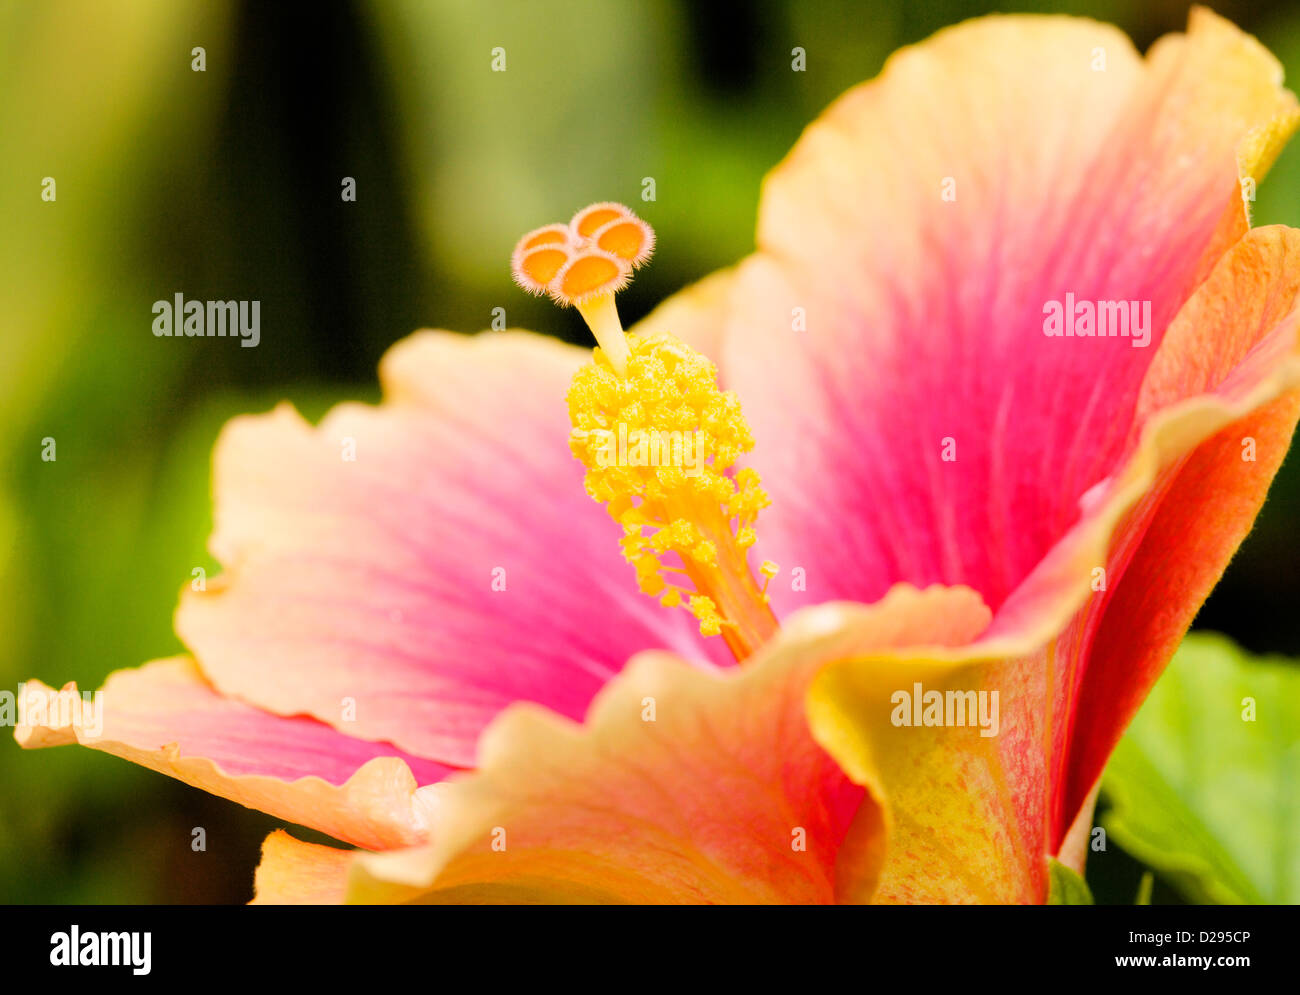 Rosa und gelben Hibiskusblüte. Stockfoto